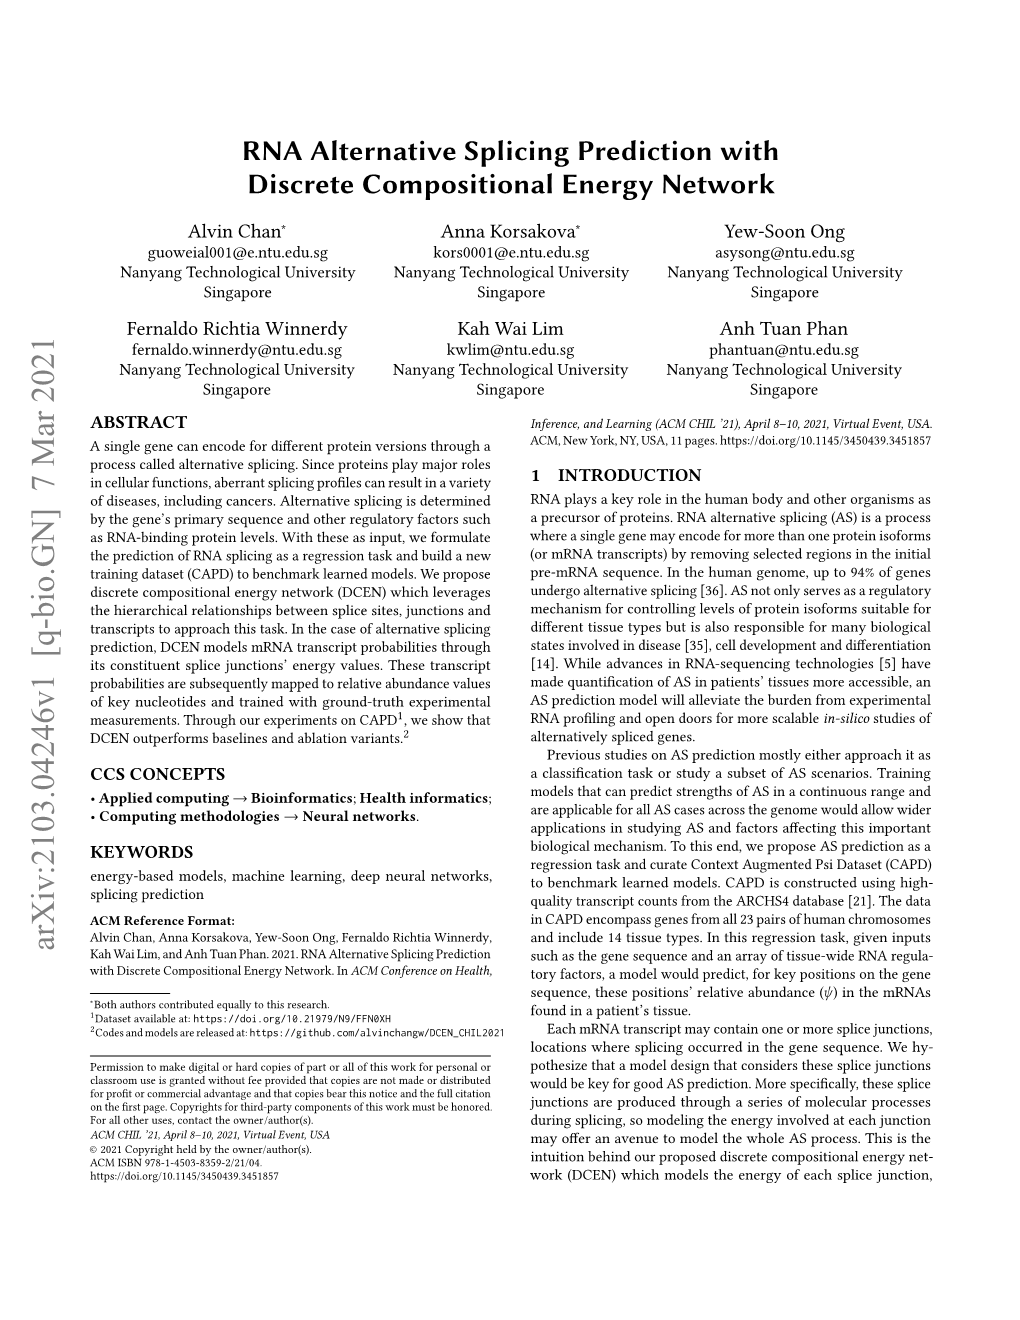 RNA Alternative Splicing Prediction with Discrete Compositional Energy Network